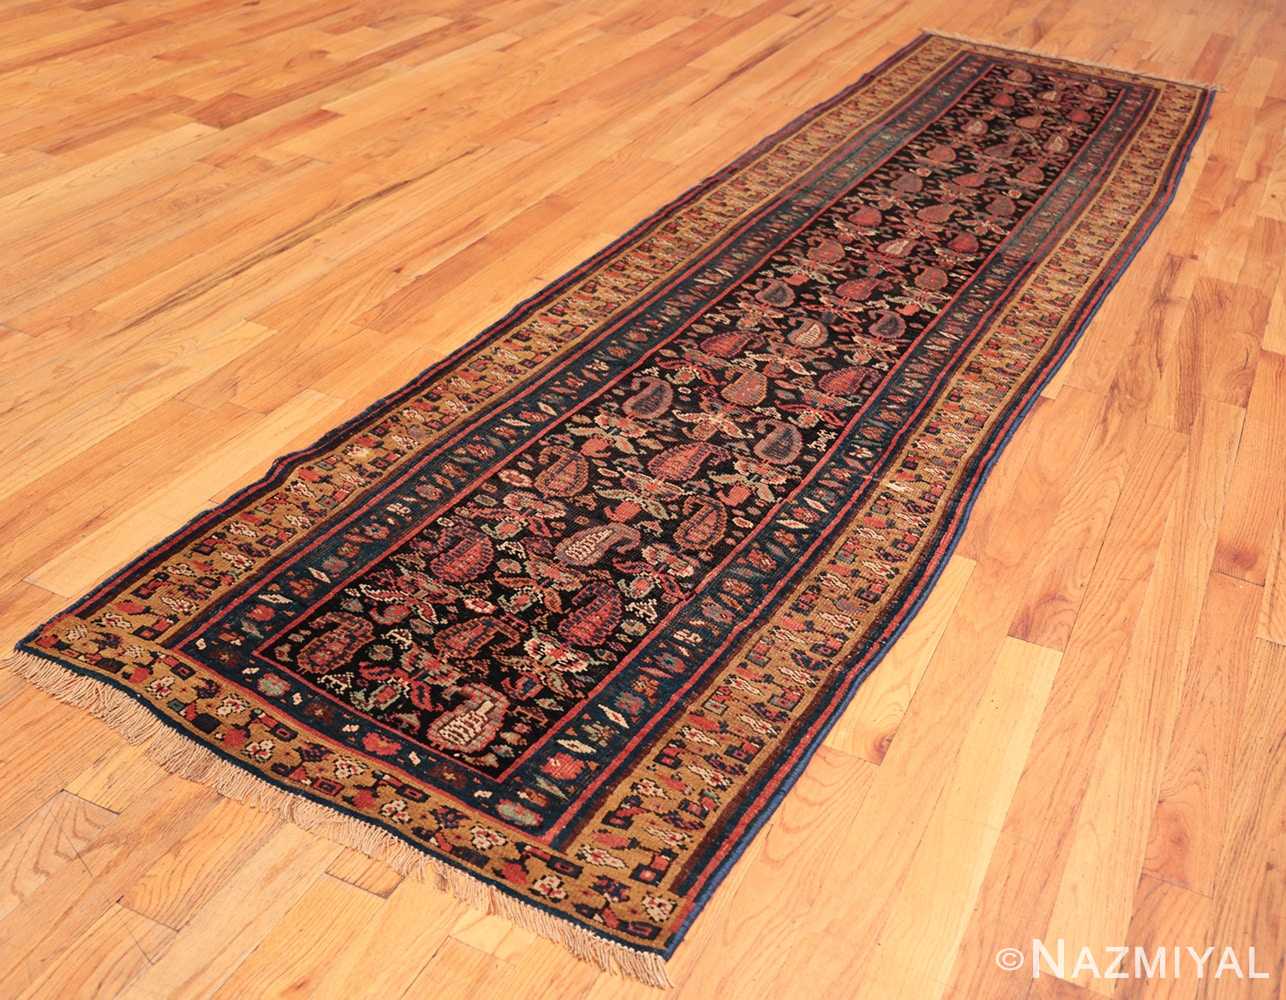 Full Antique Bidjar Persian runner rug 50280 by Nazmiyal